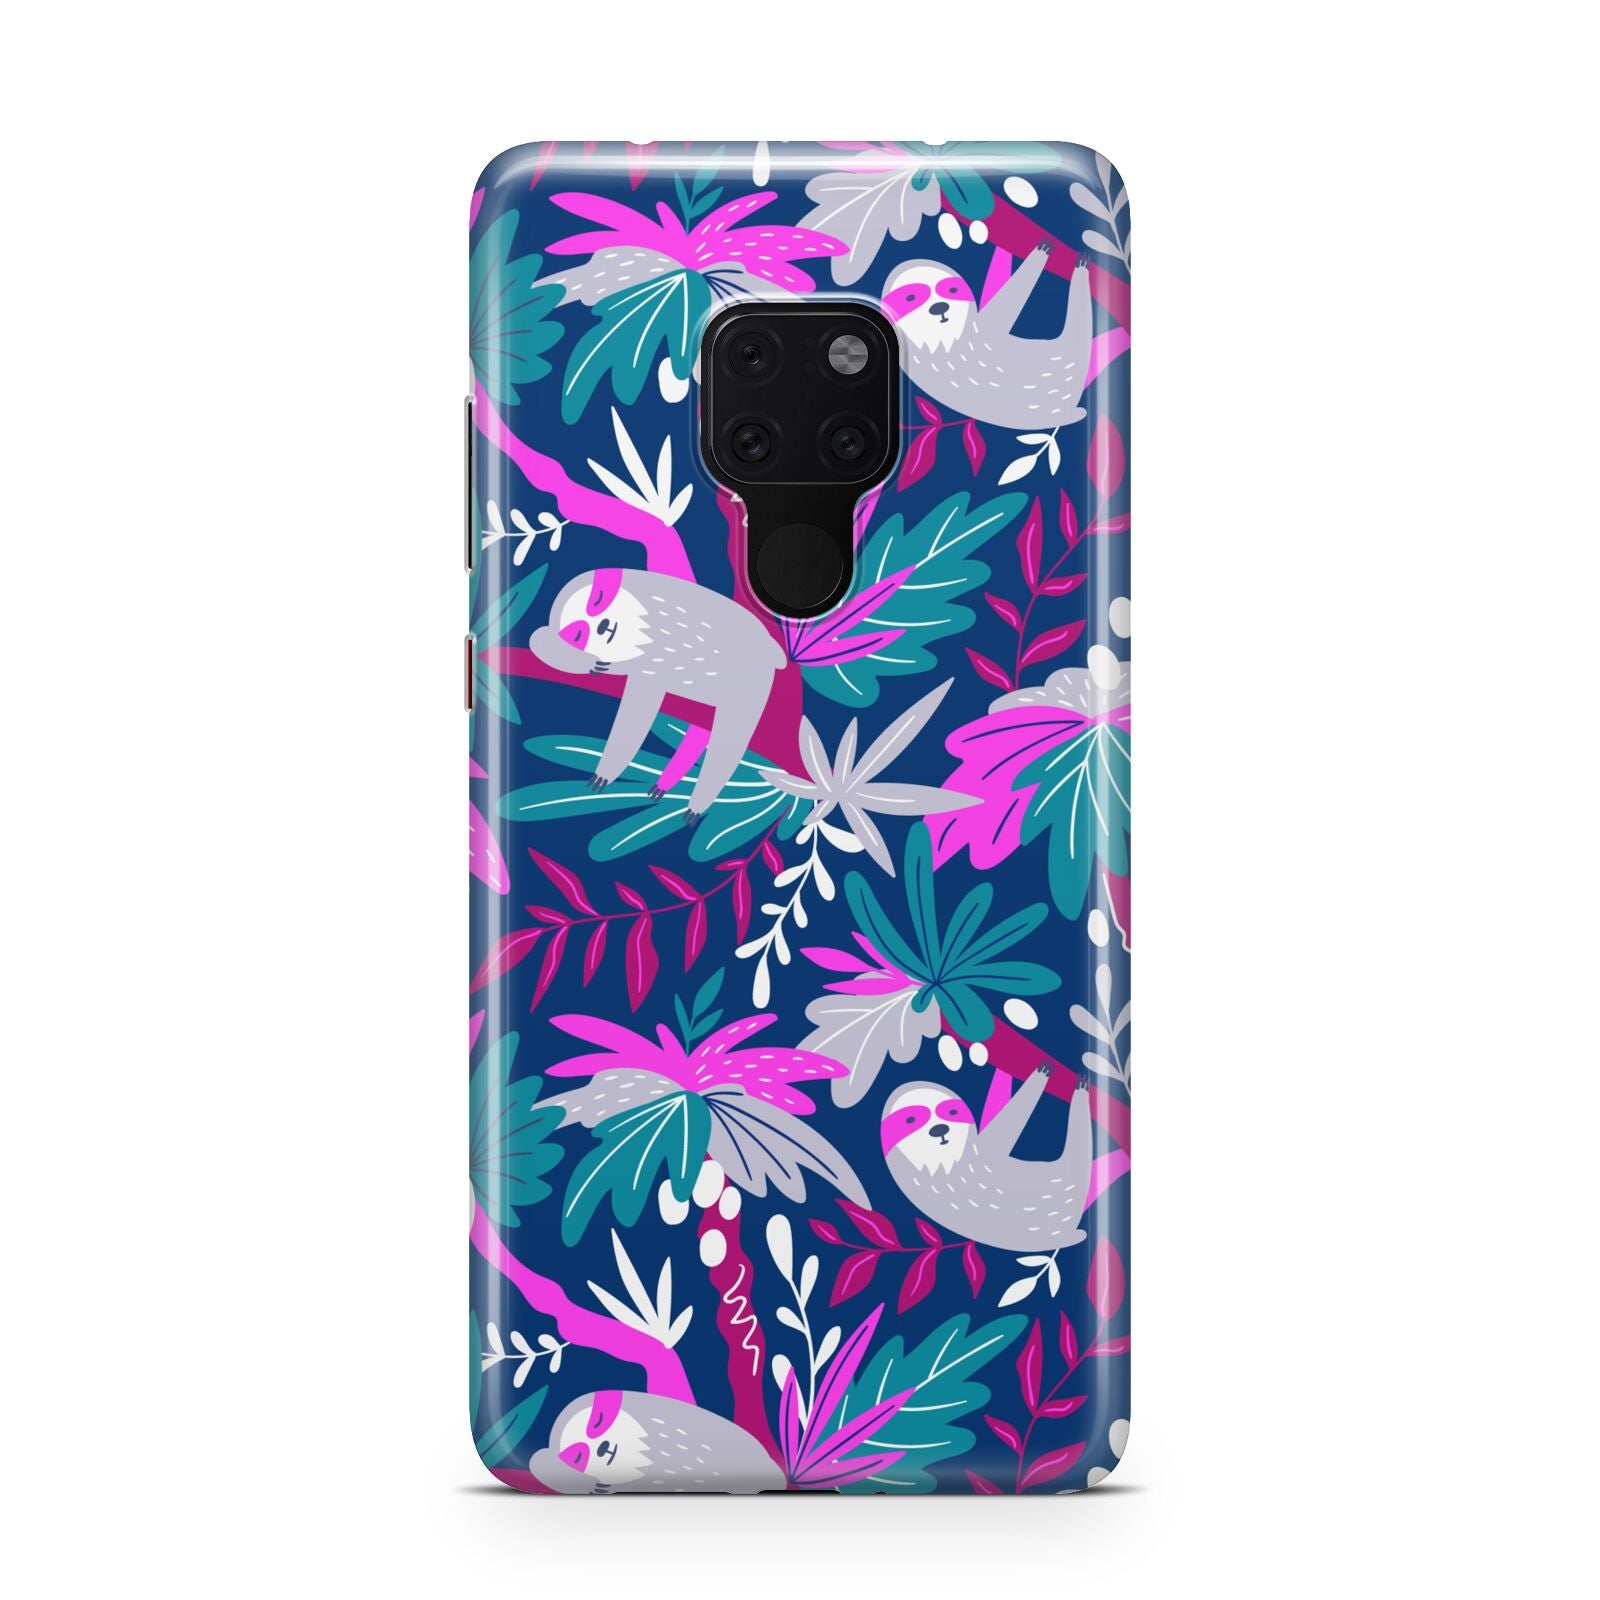 Sloth Huawei Mate 20 Phone Case